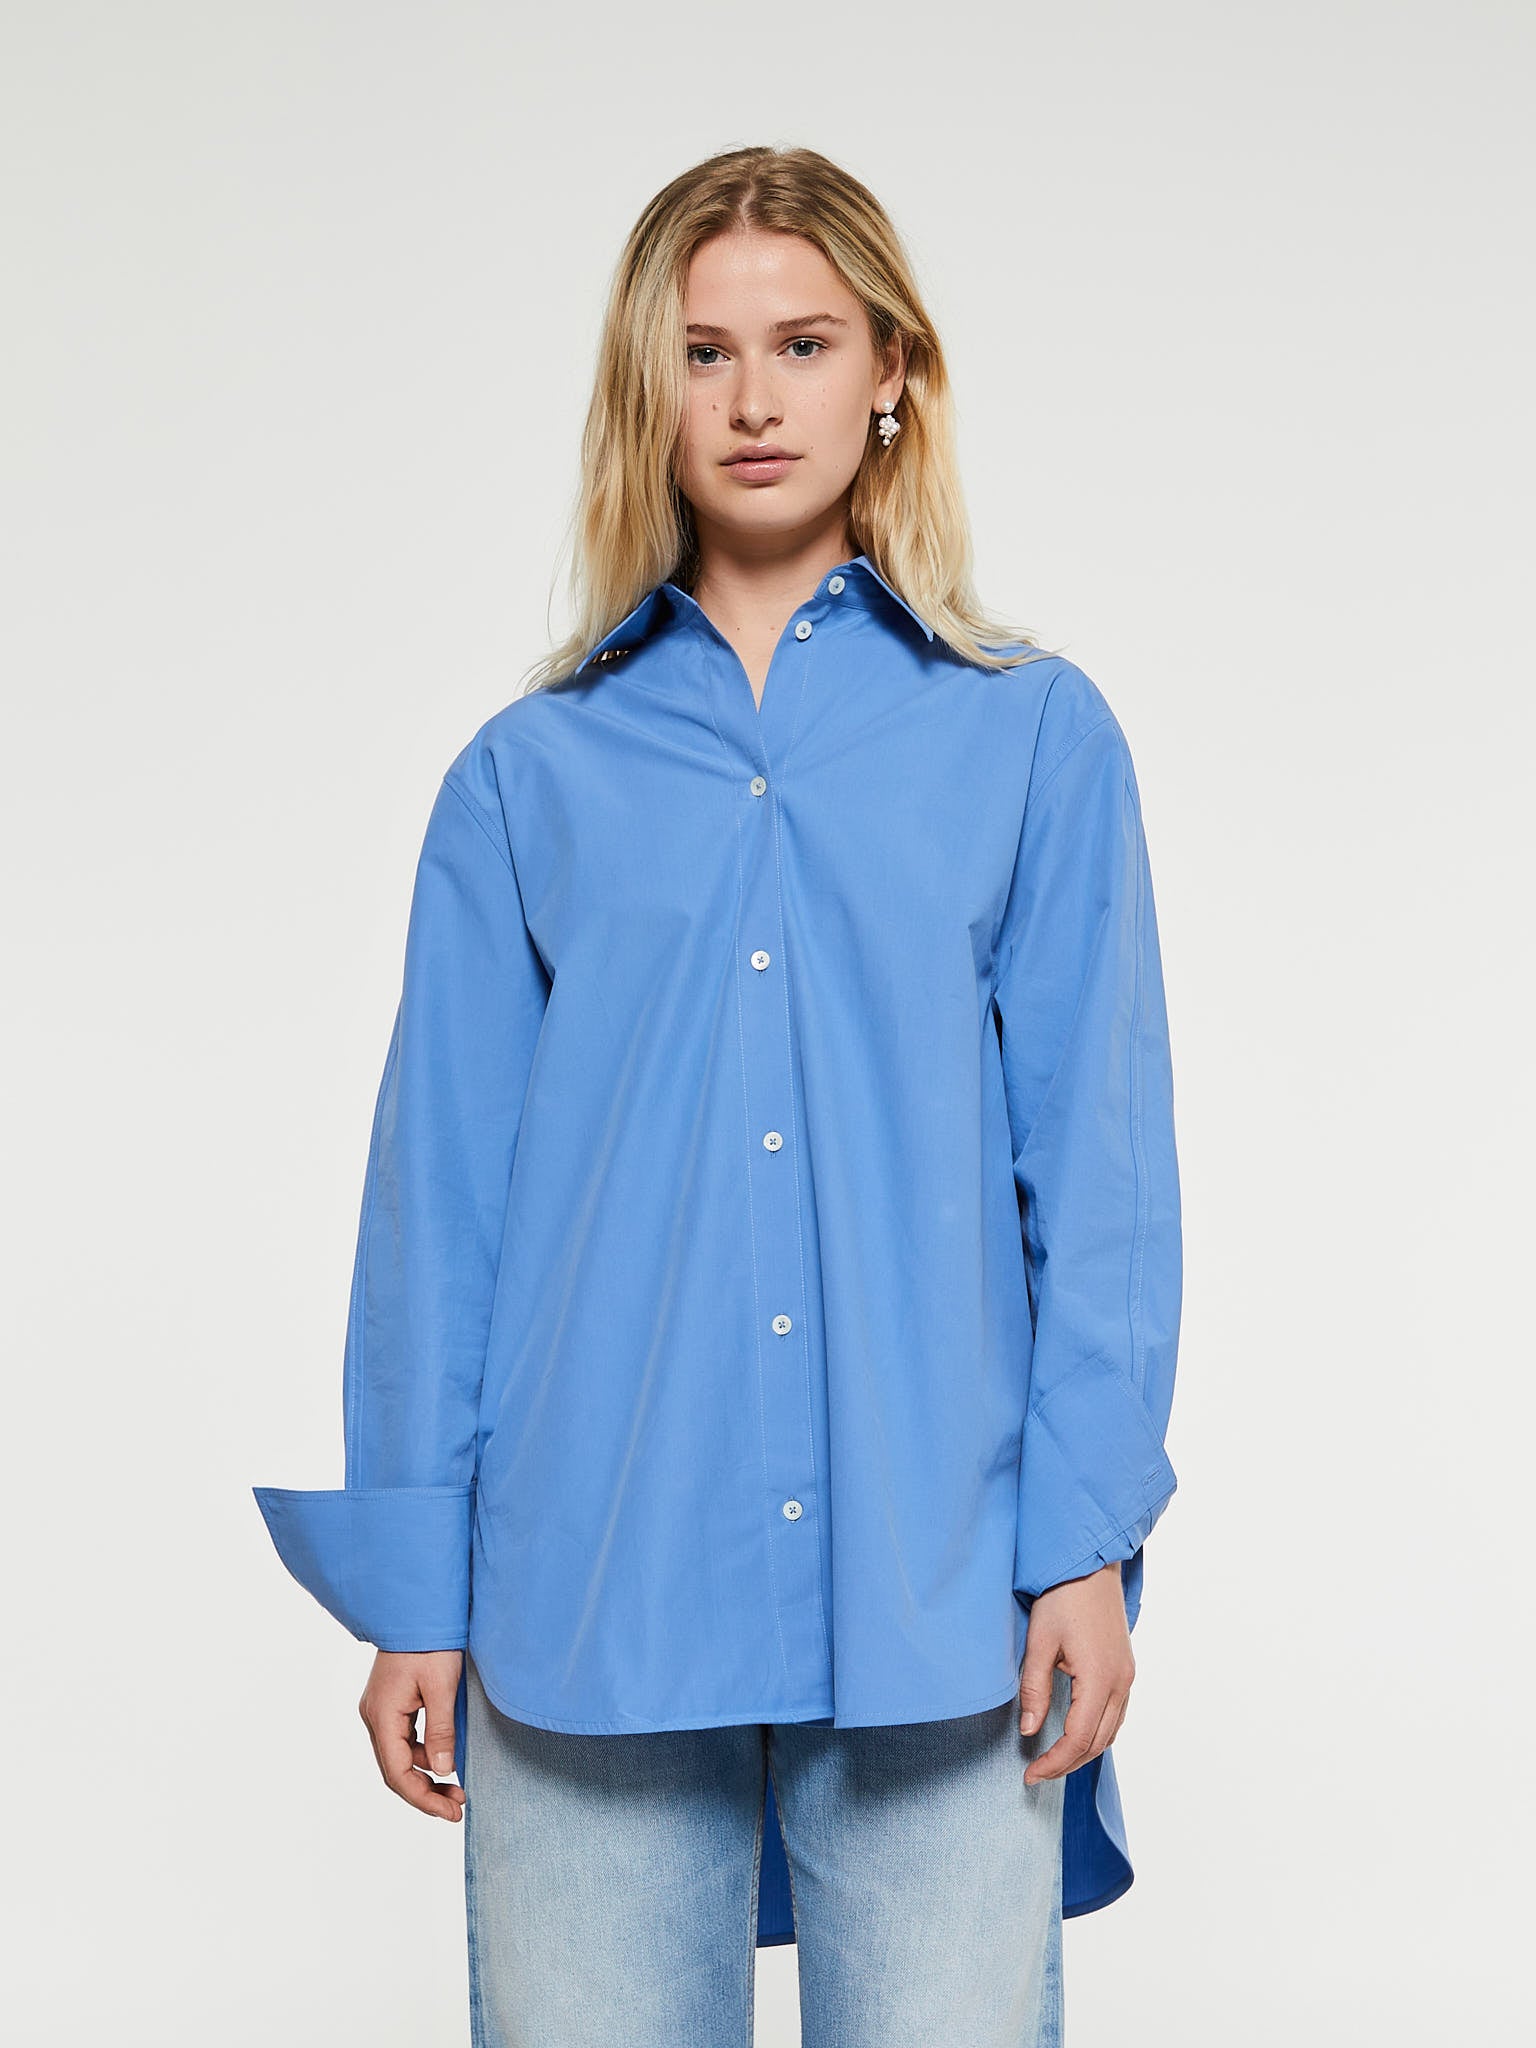 Kimono Sleeve Poplin Shirt in Blue